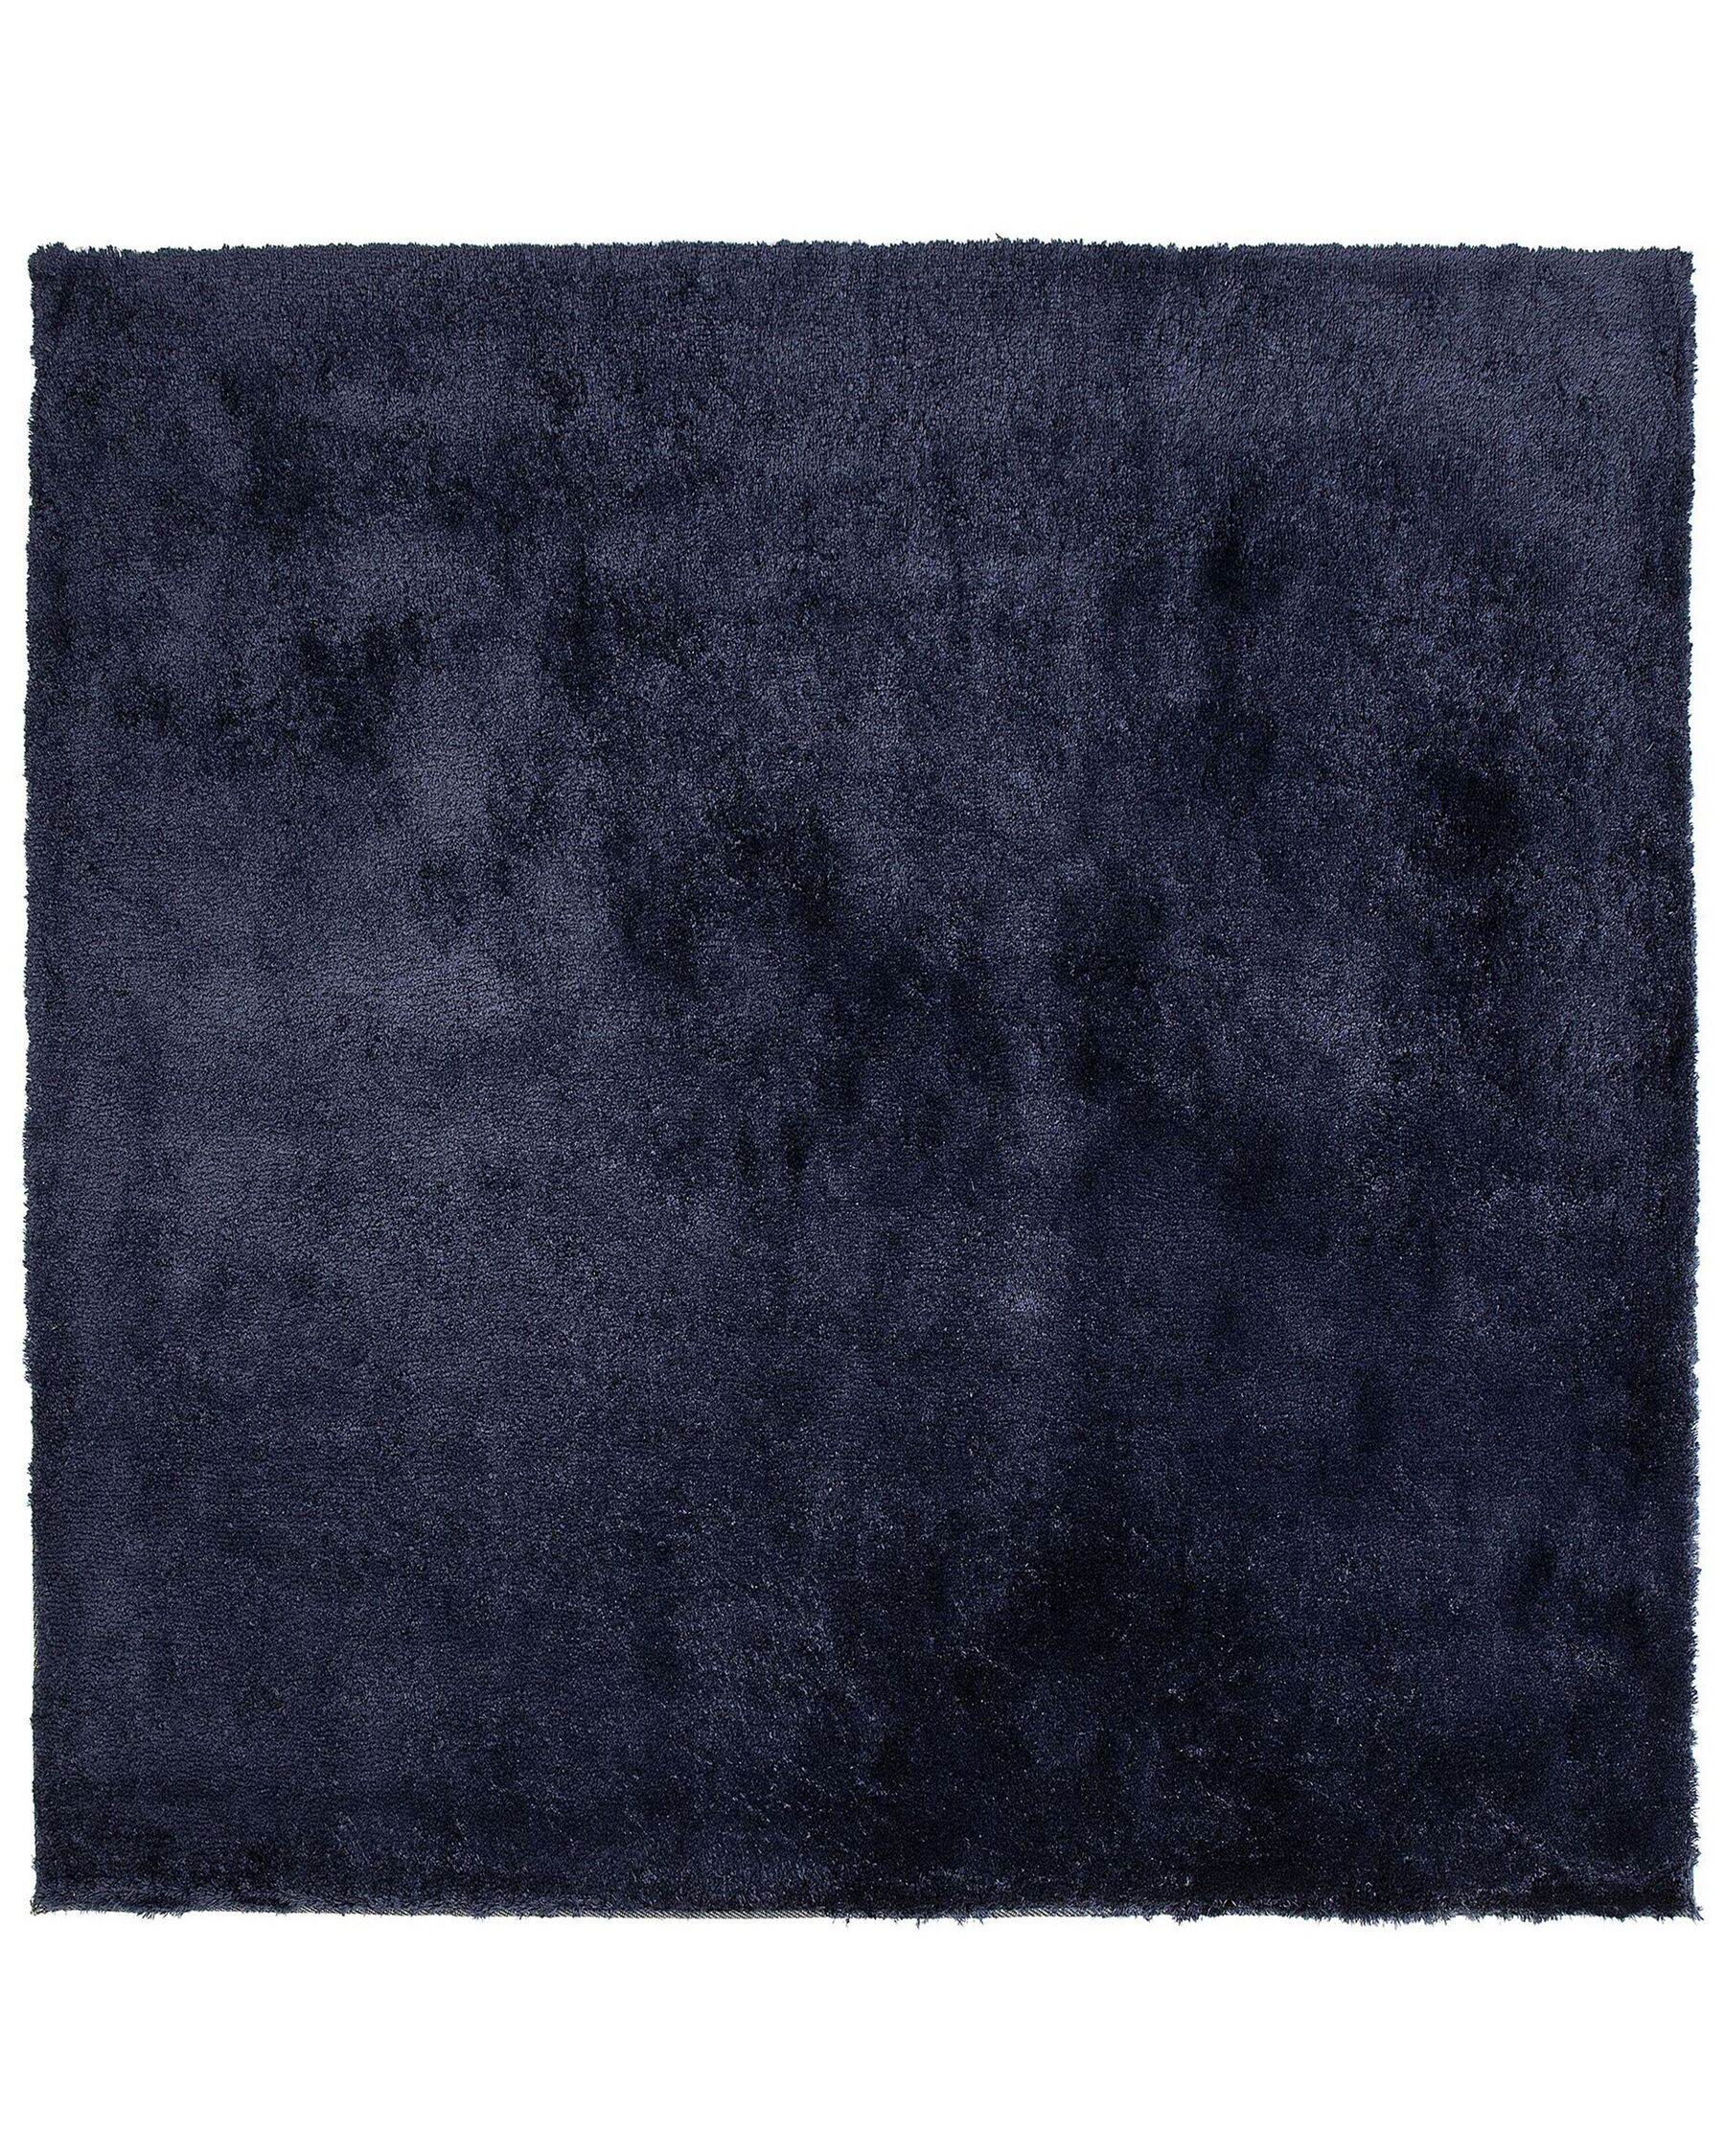 Tapete azul escuro 200 x 200 cm EVREN_758771